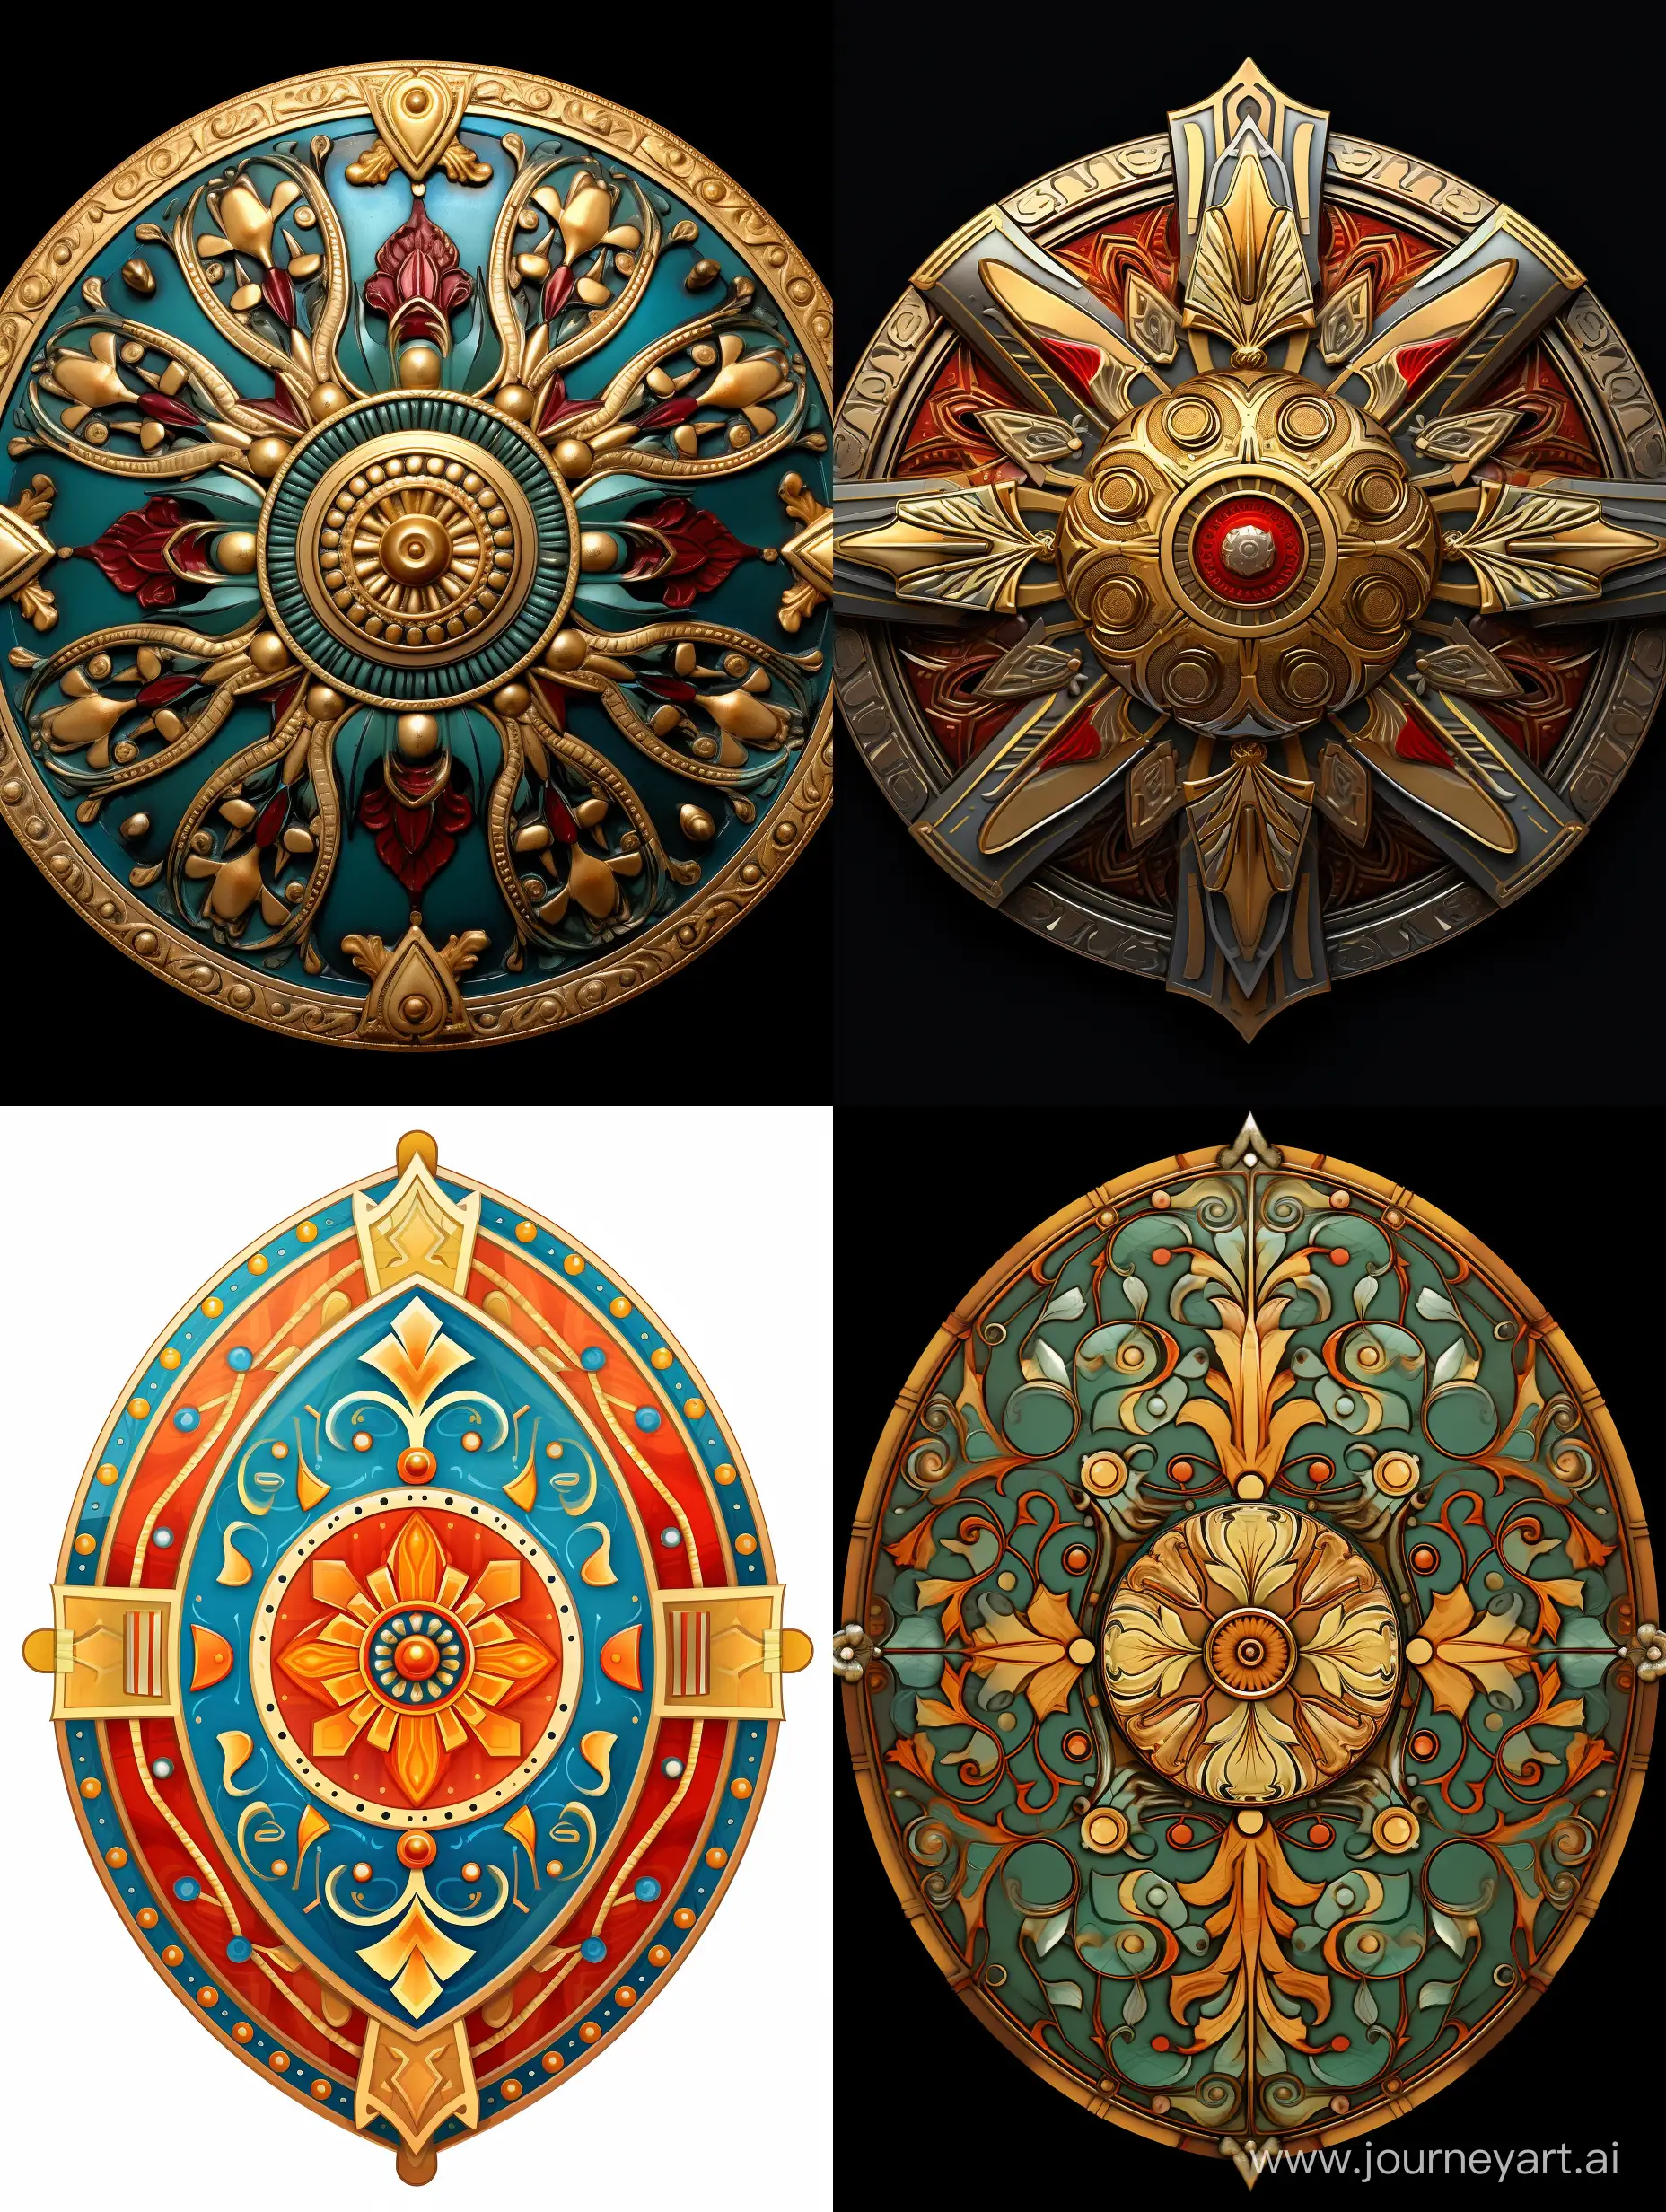 Ancient Roman shield, part of defensive armament, Greek ornament in a circle, detailed, decorative, bright colors, 